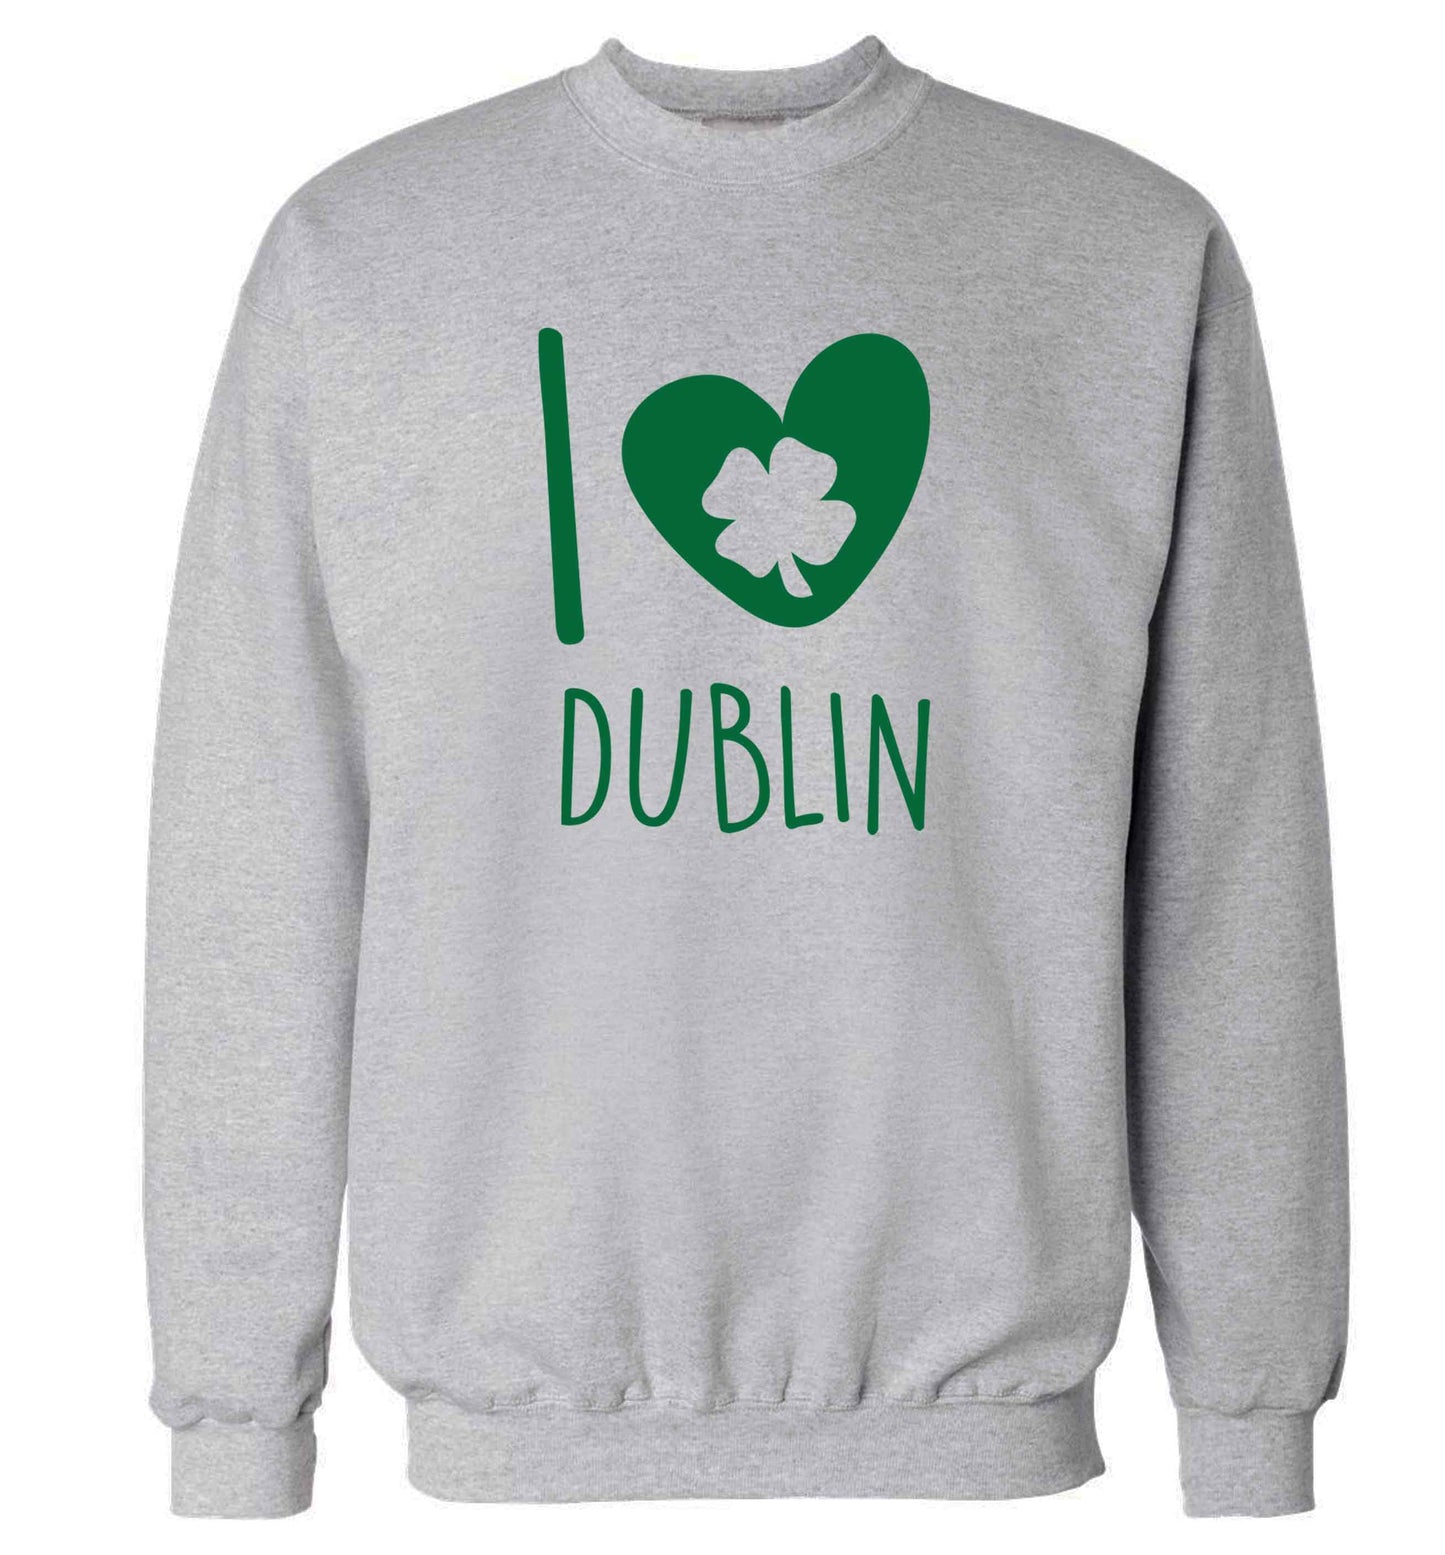 I love Dublin adult's unisex grey sweater 2XL